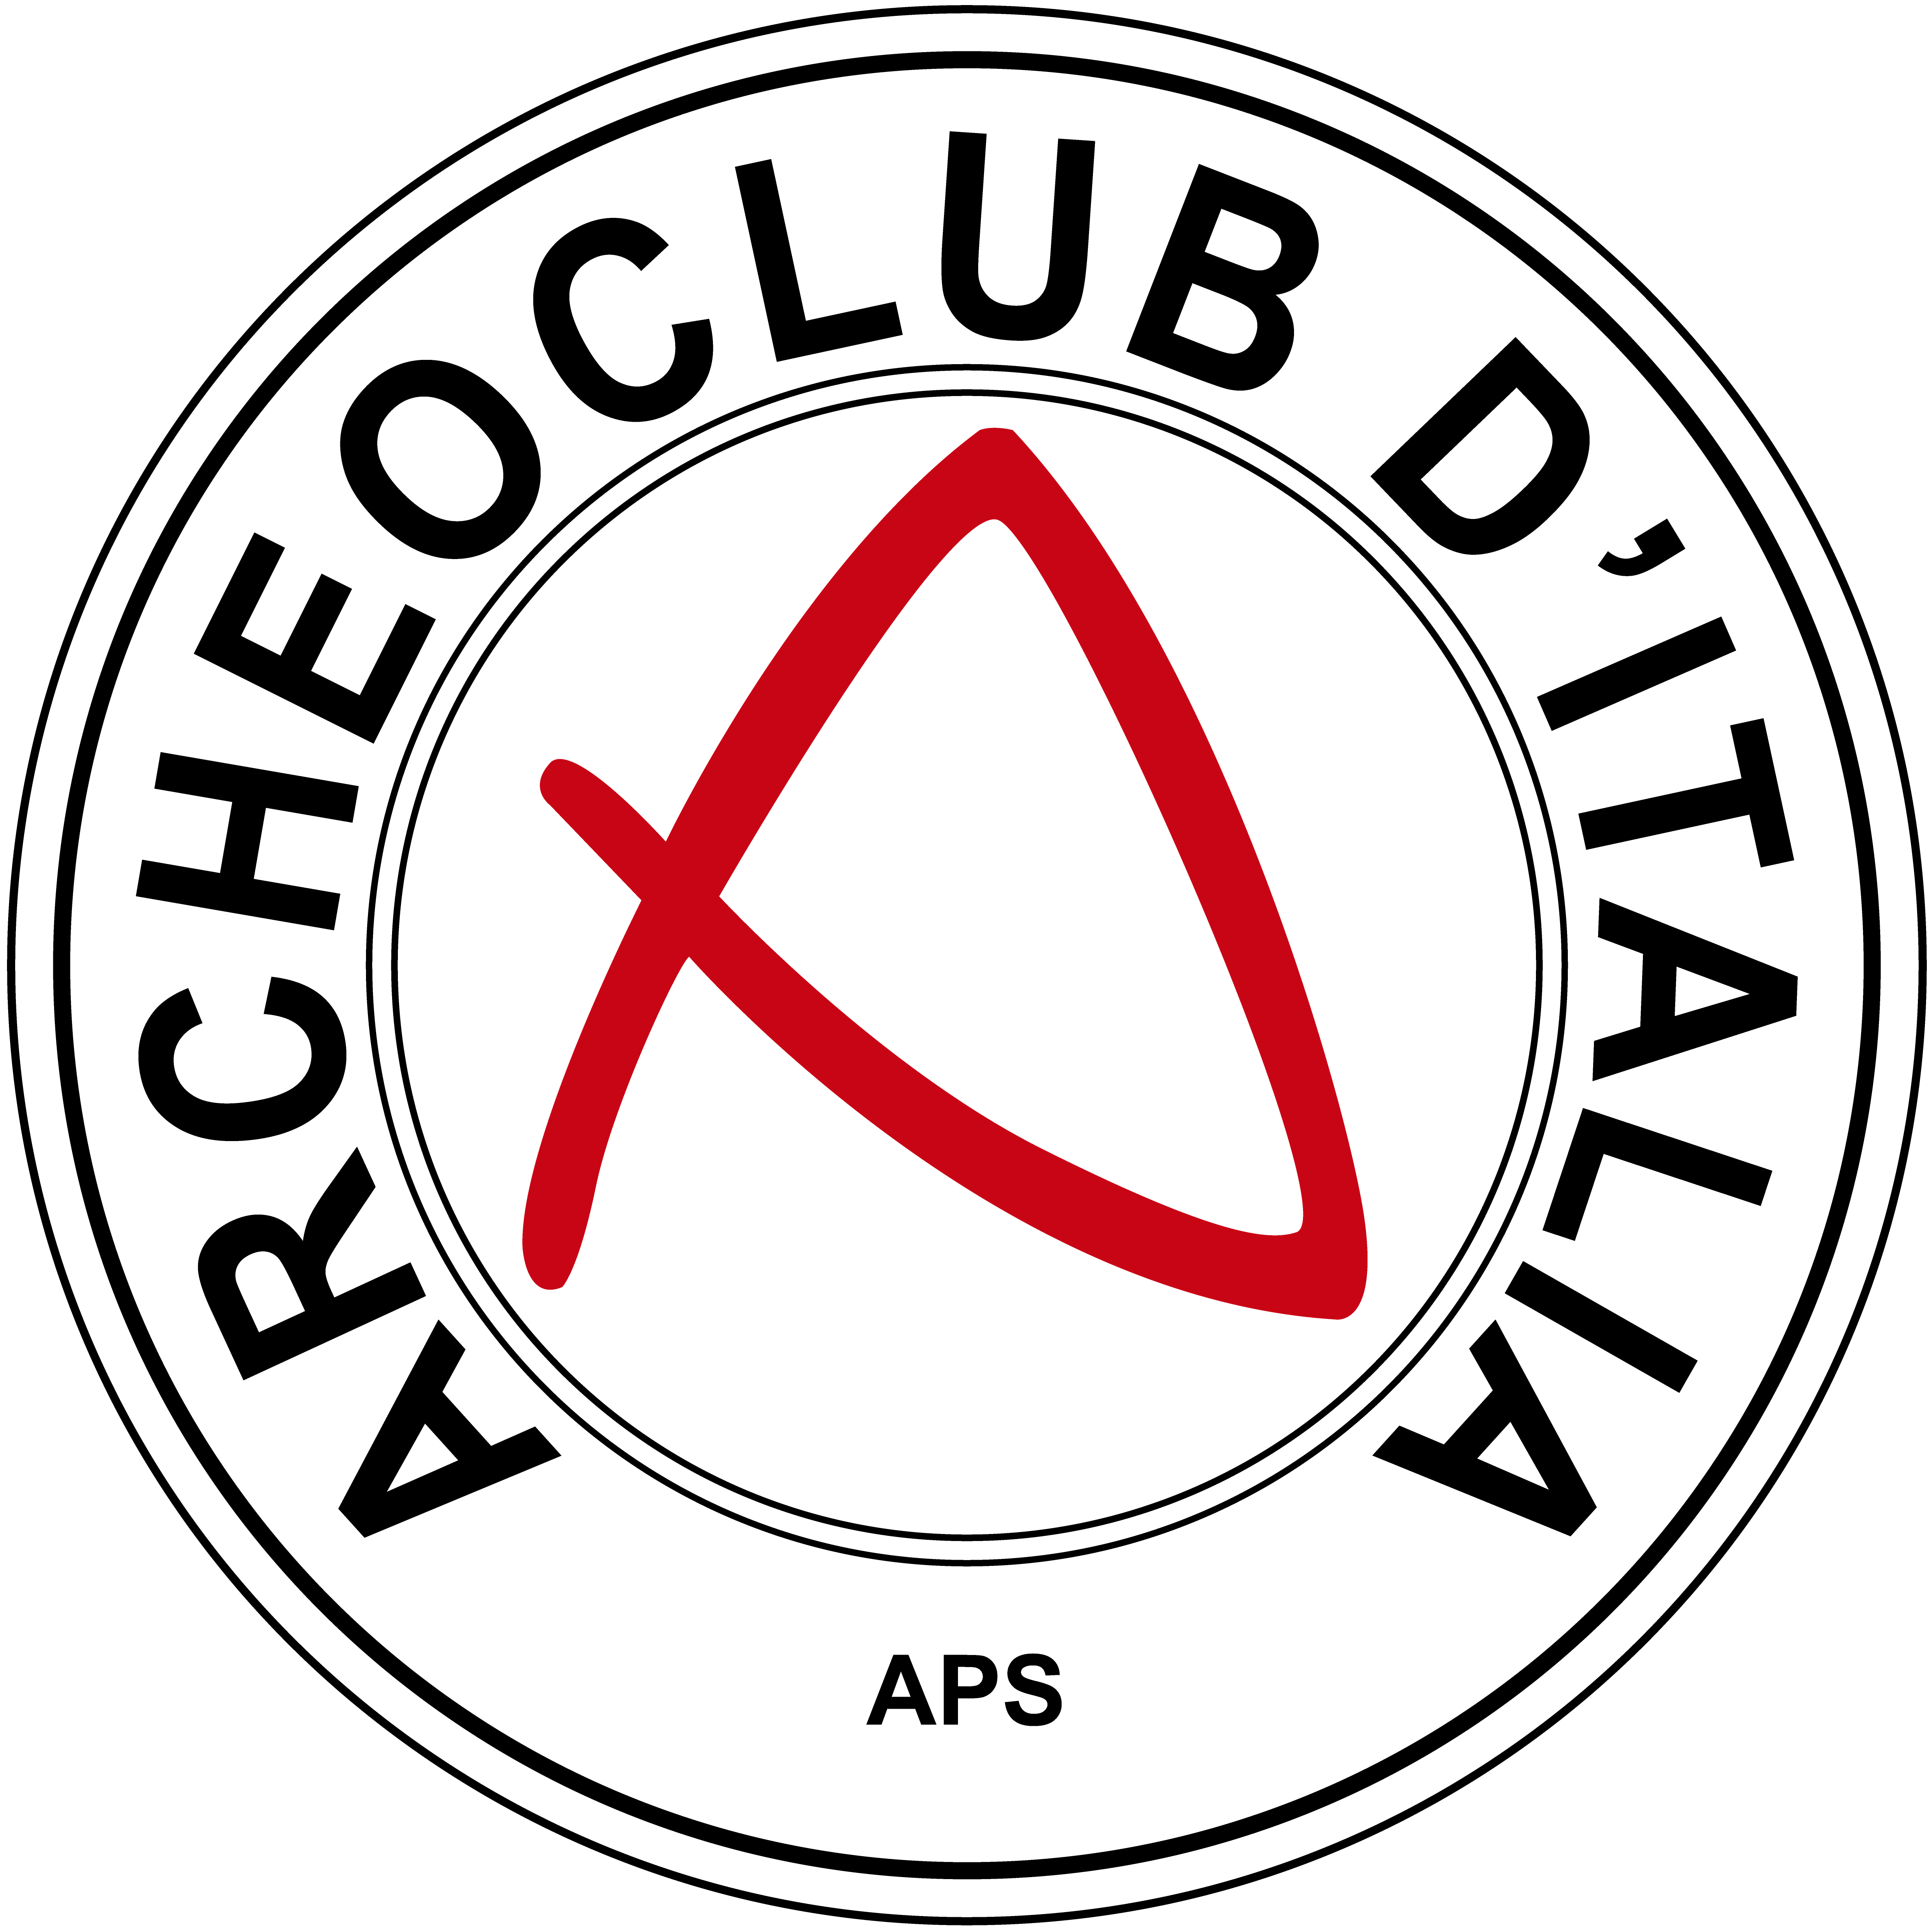 Archeoclub Cerignola